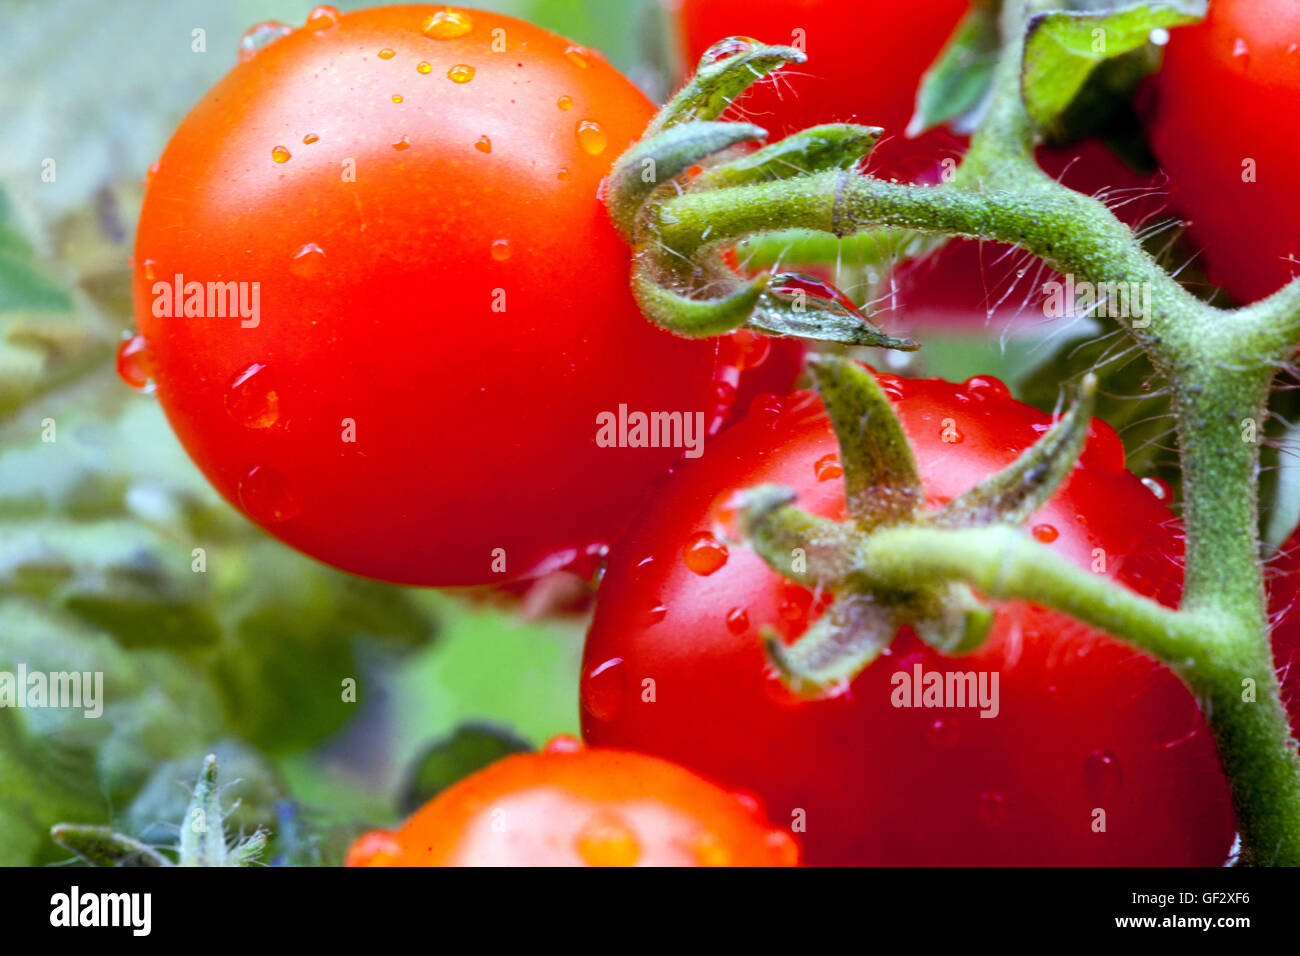 Cherry dwarf tomatoes, Tomato cherry tomatoes close up Stock Photo